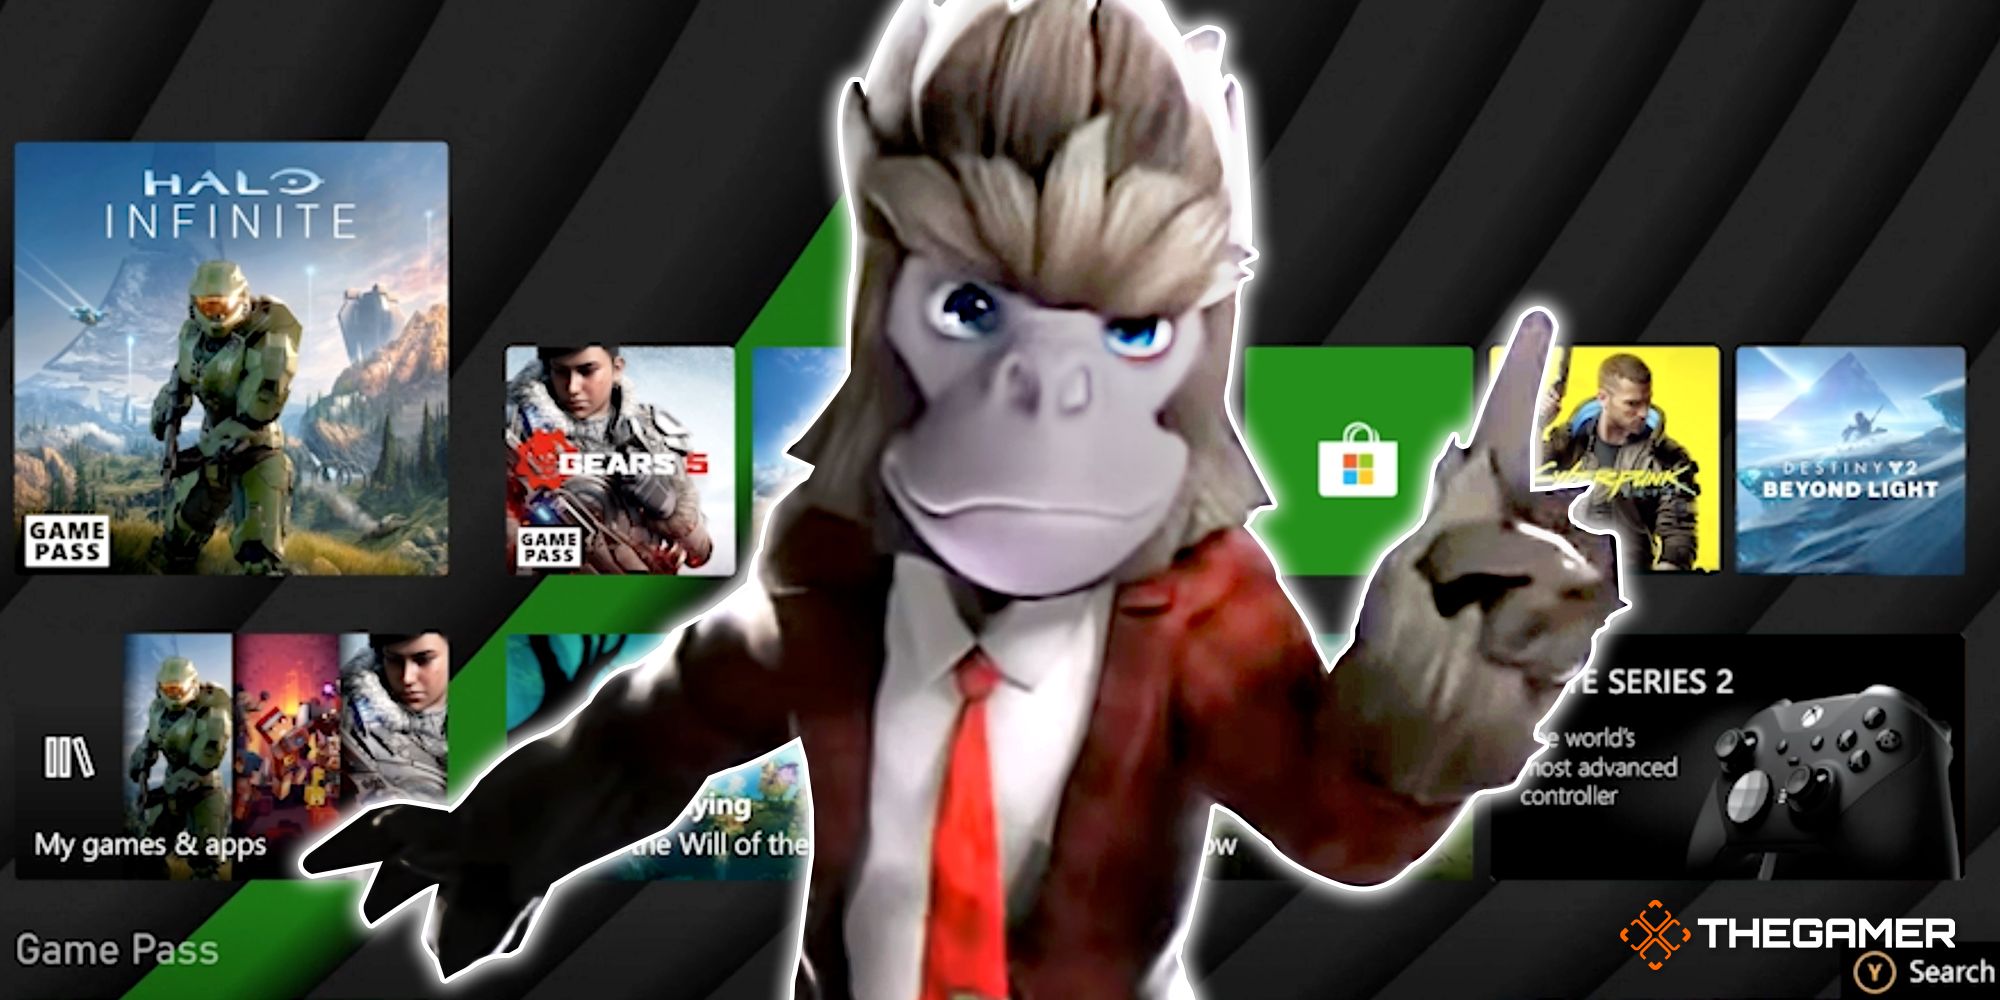 Screens of Xbox dashboard and gorilla avatar.